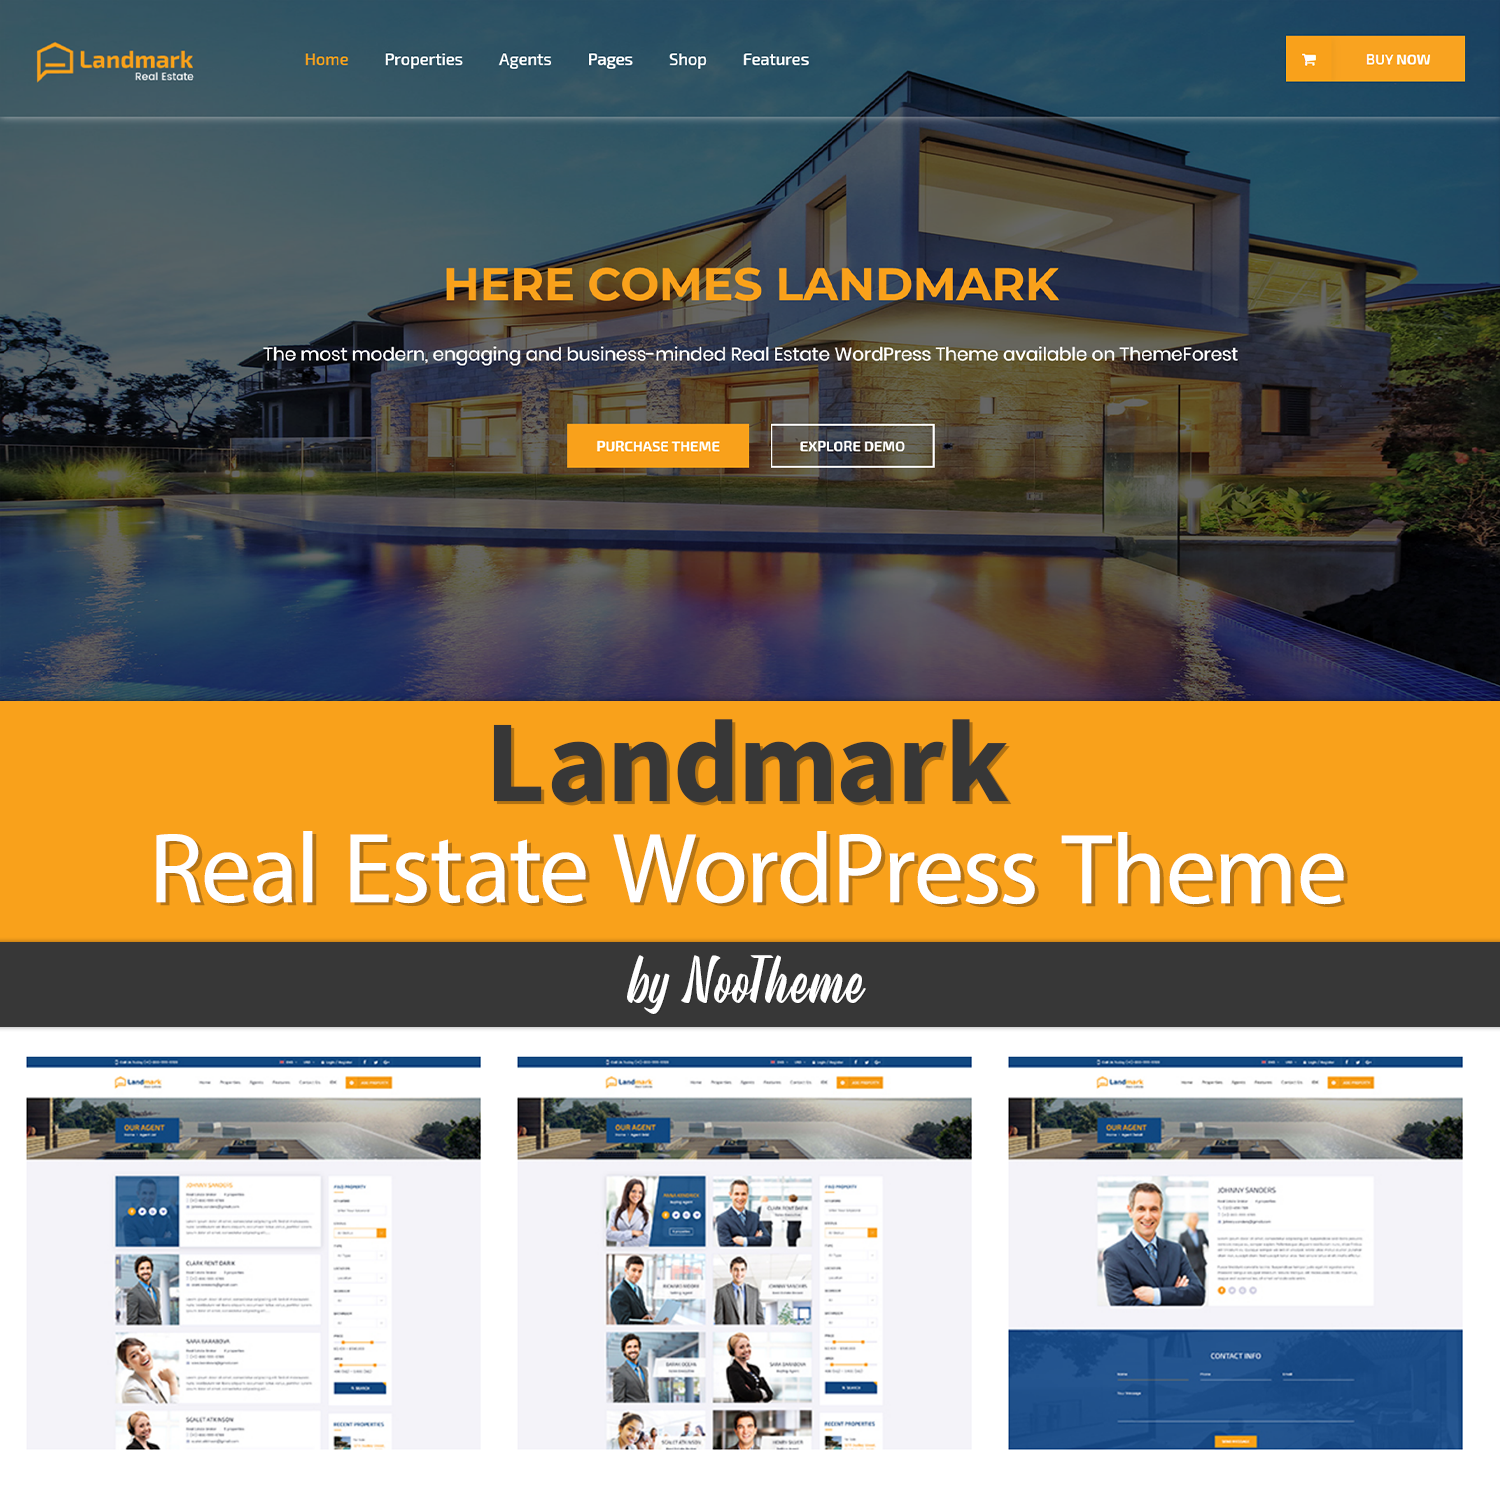 Images with landmark real estate wordpress theme.